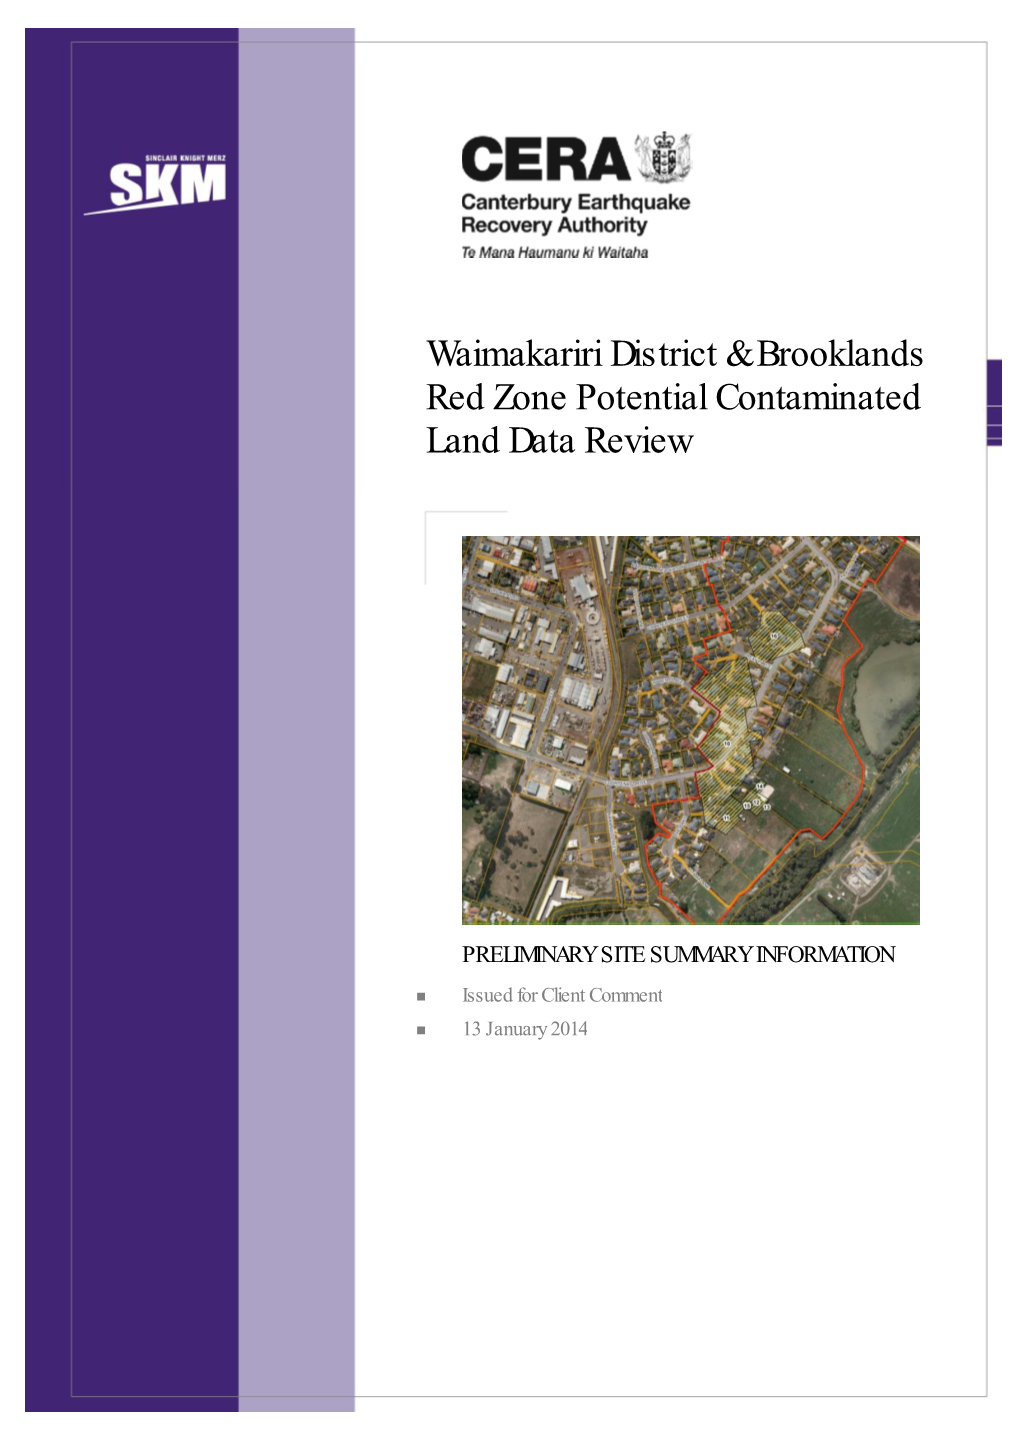 Waimakariri District & Brooklands Red Zone Potential Contaminated Land